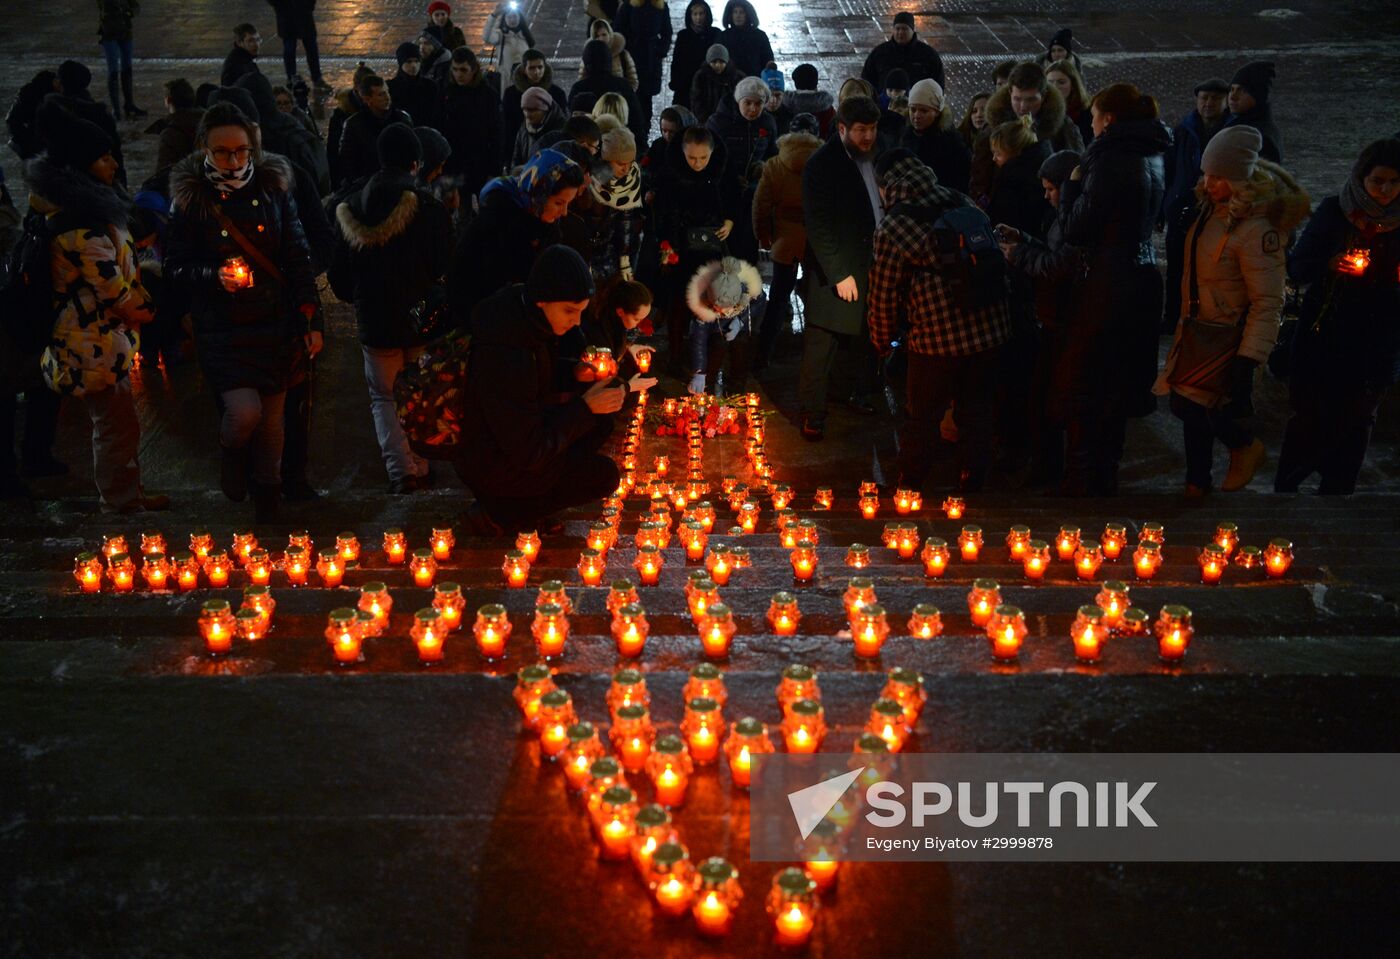 Commemorating Russian Ambassador Andrei Karlov murdered in Turkey near Christ the Savior Cathedral